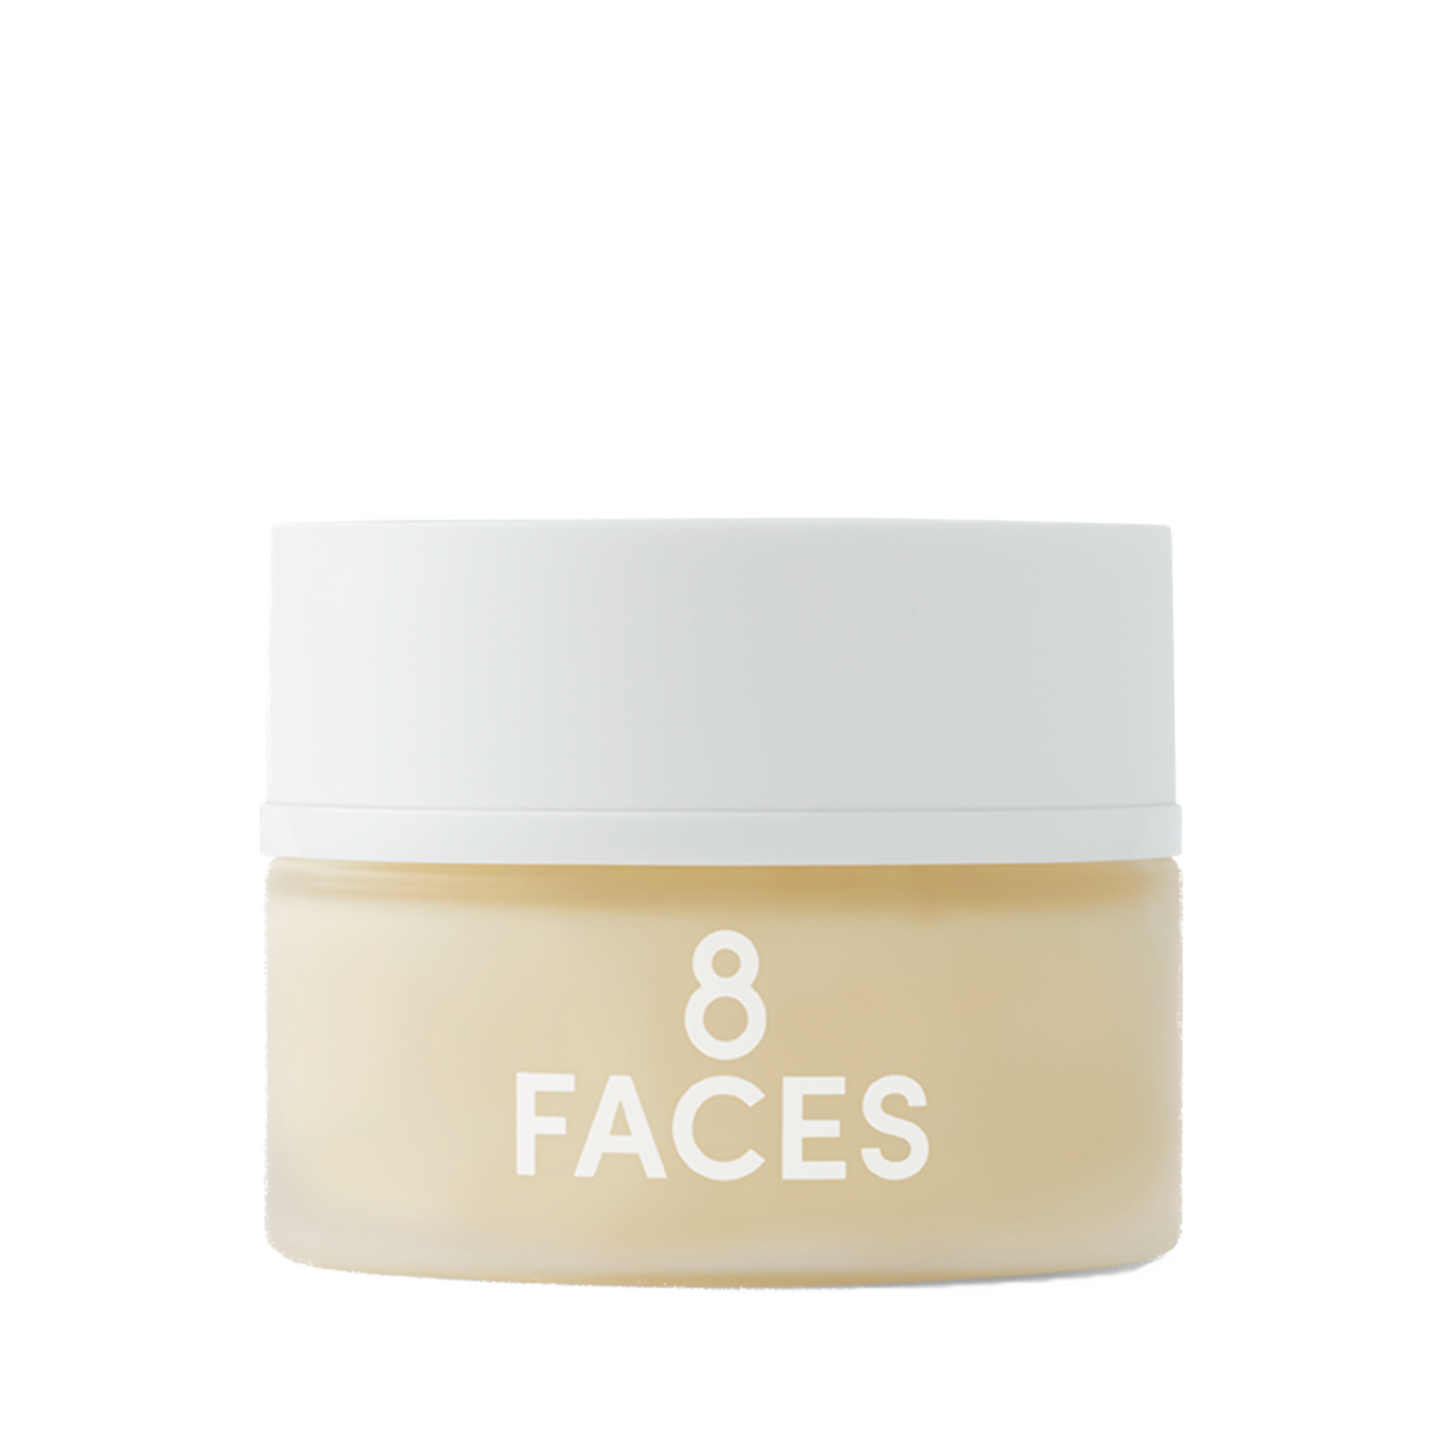 8 faces muse & heroine organic skin care green cosmetics natural makeup